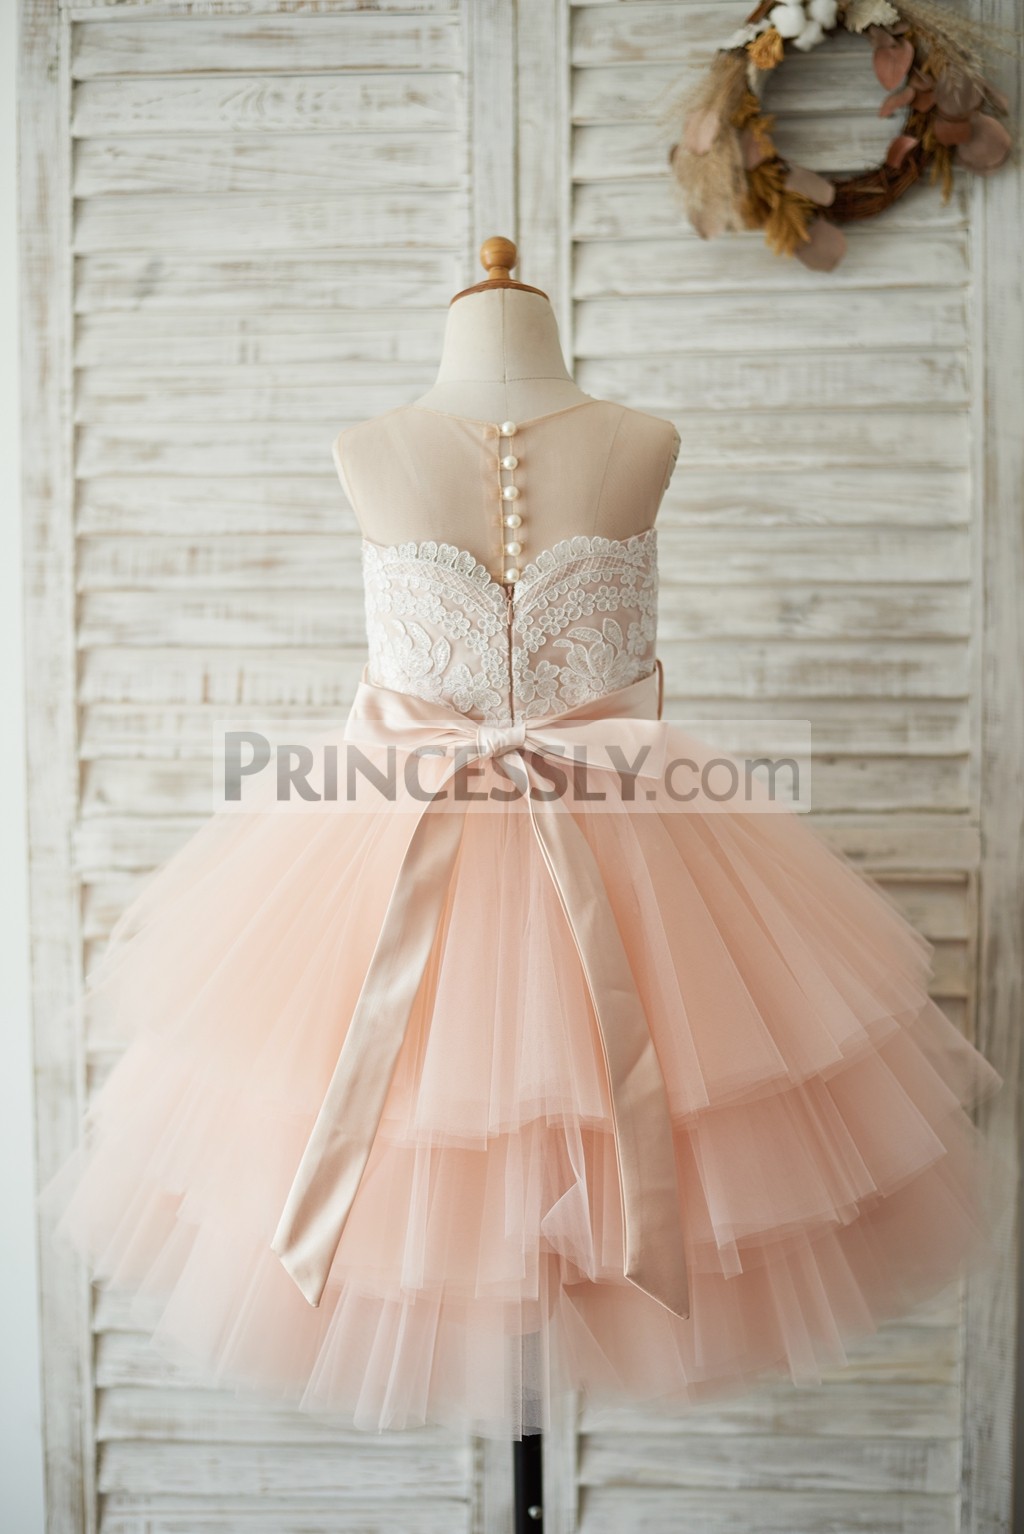 Tulle cupcake skirt peach pink wedding baby girl dress